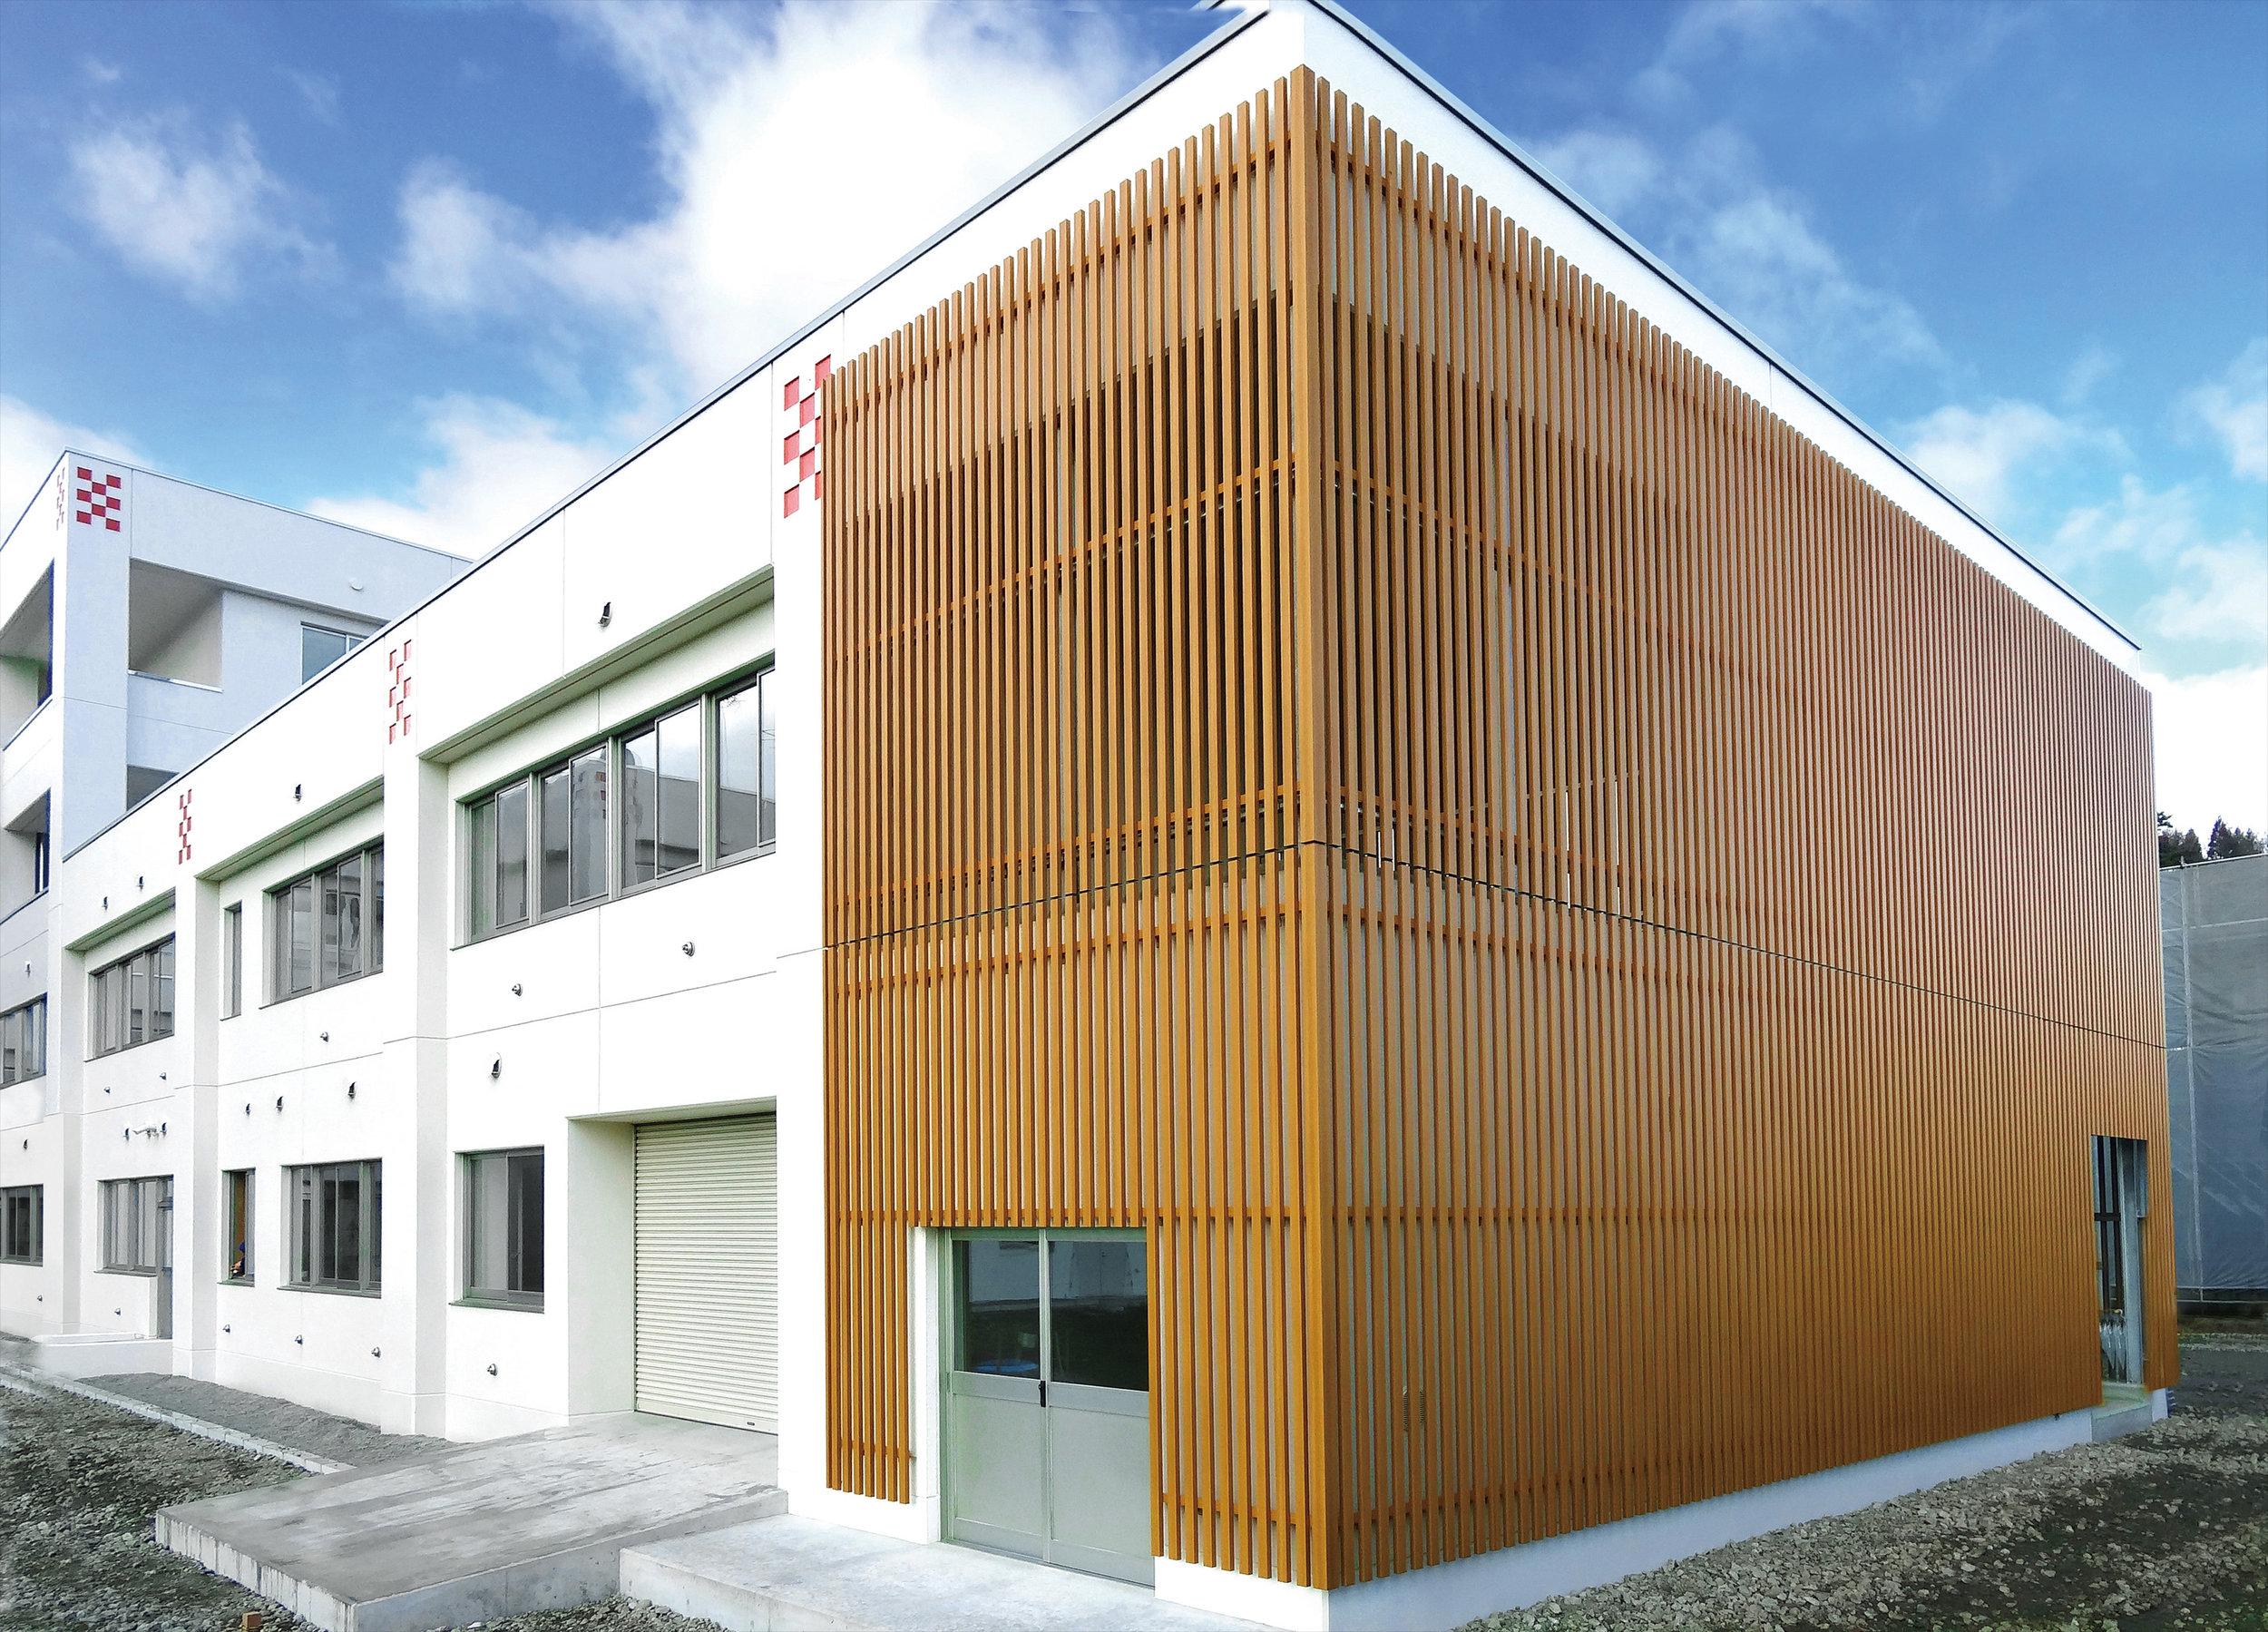  Commercial Offices - Japan Ever Art Wood® battens - Mizotsuki 30x60 